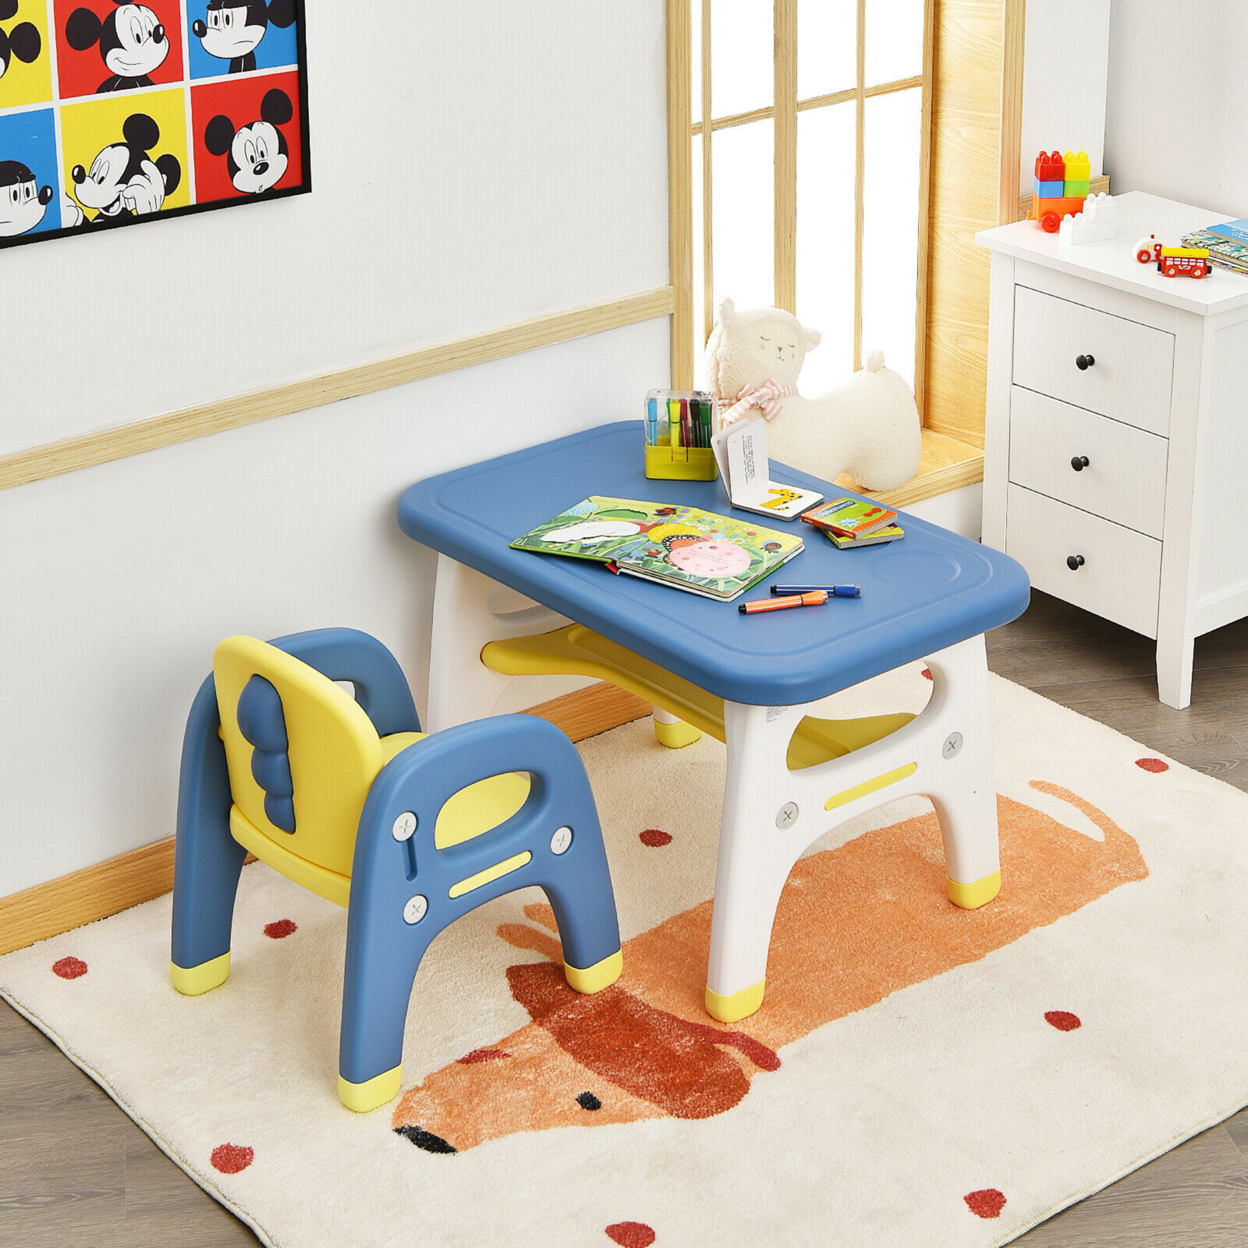 Kids Dinosaur Table And Chair Set Activity Study Desk W/ Building Blocks